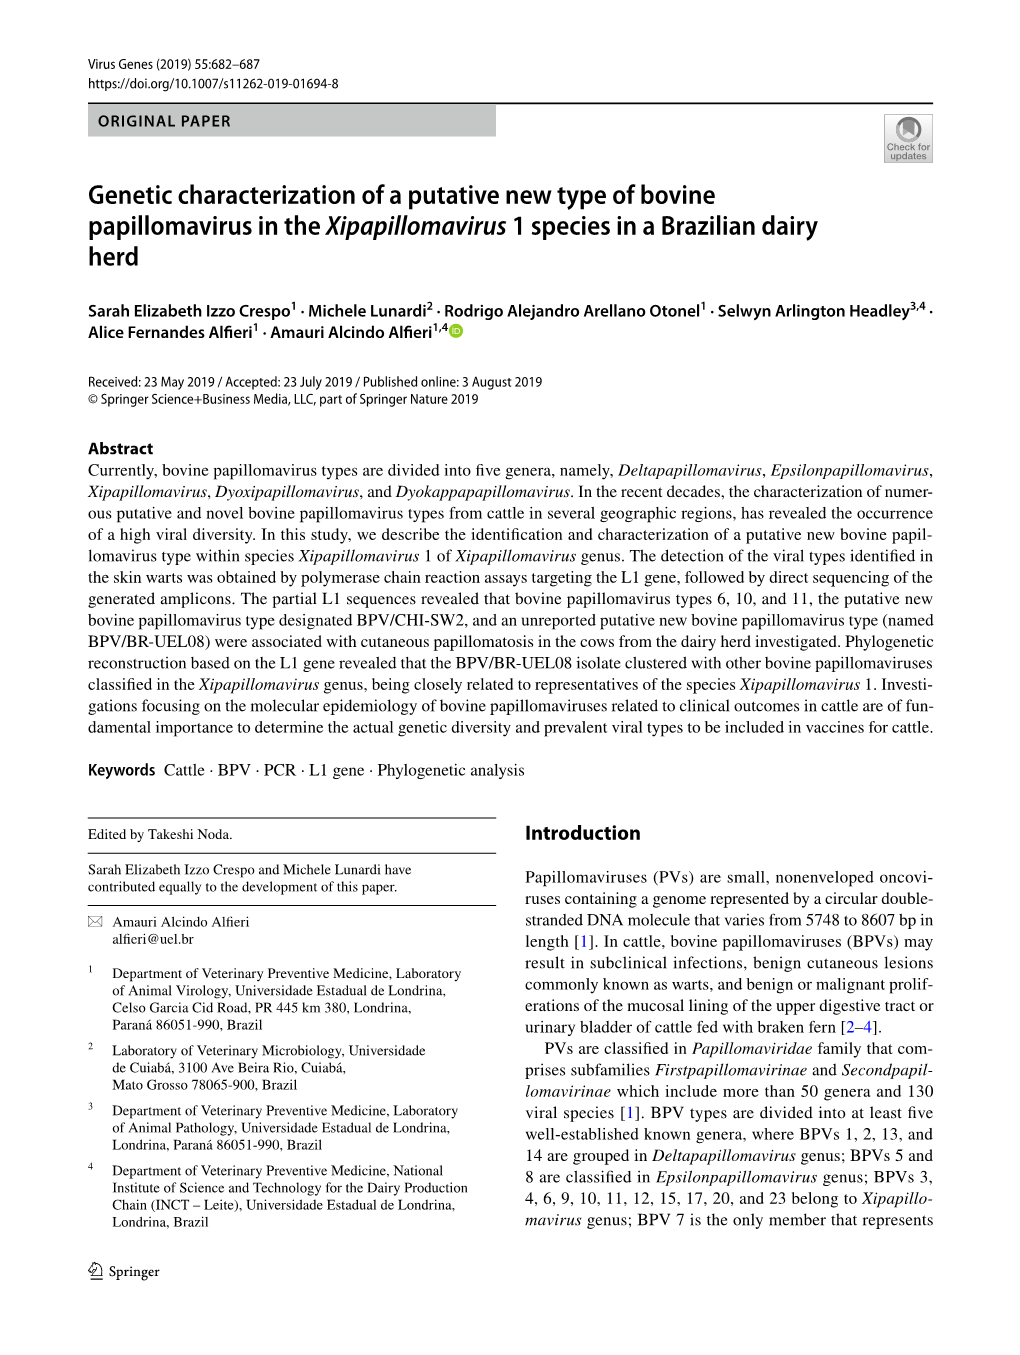 Genetic Characterization of a Putative New Type of Bovine Papillomavirus in the Xipapillomavirus 1 Species in a Brazilian Dairy Herd